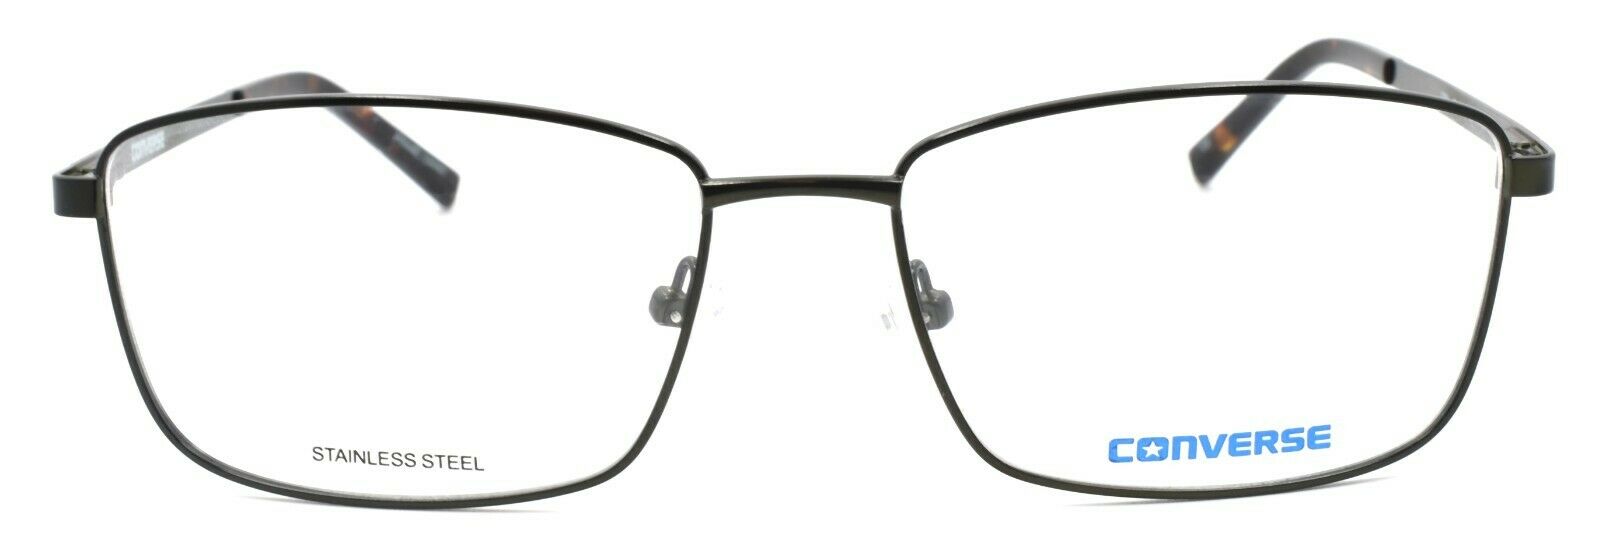 2-CONVERSE G201 Men's Eyeglasses Frames 56-17-140 Black + CASE-751286316919-IKSpecs